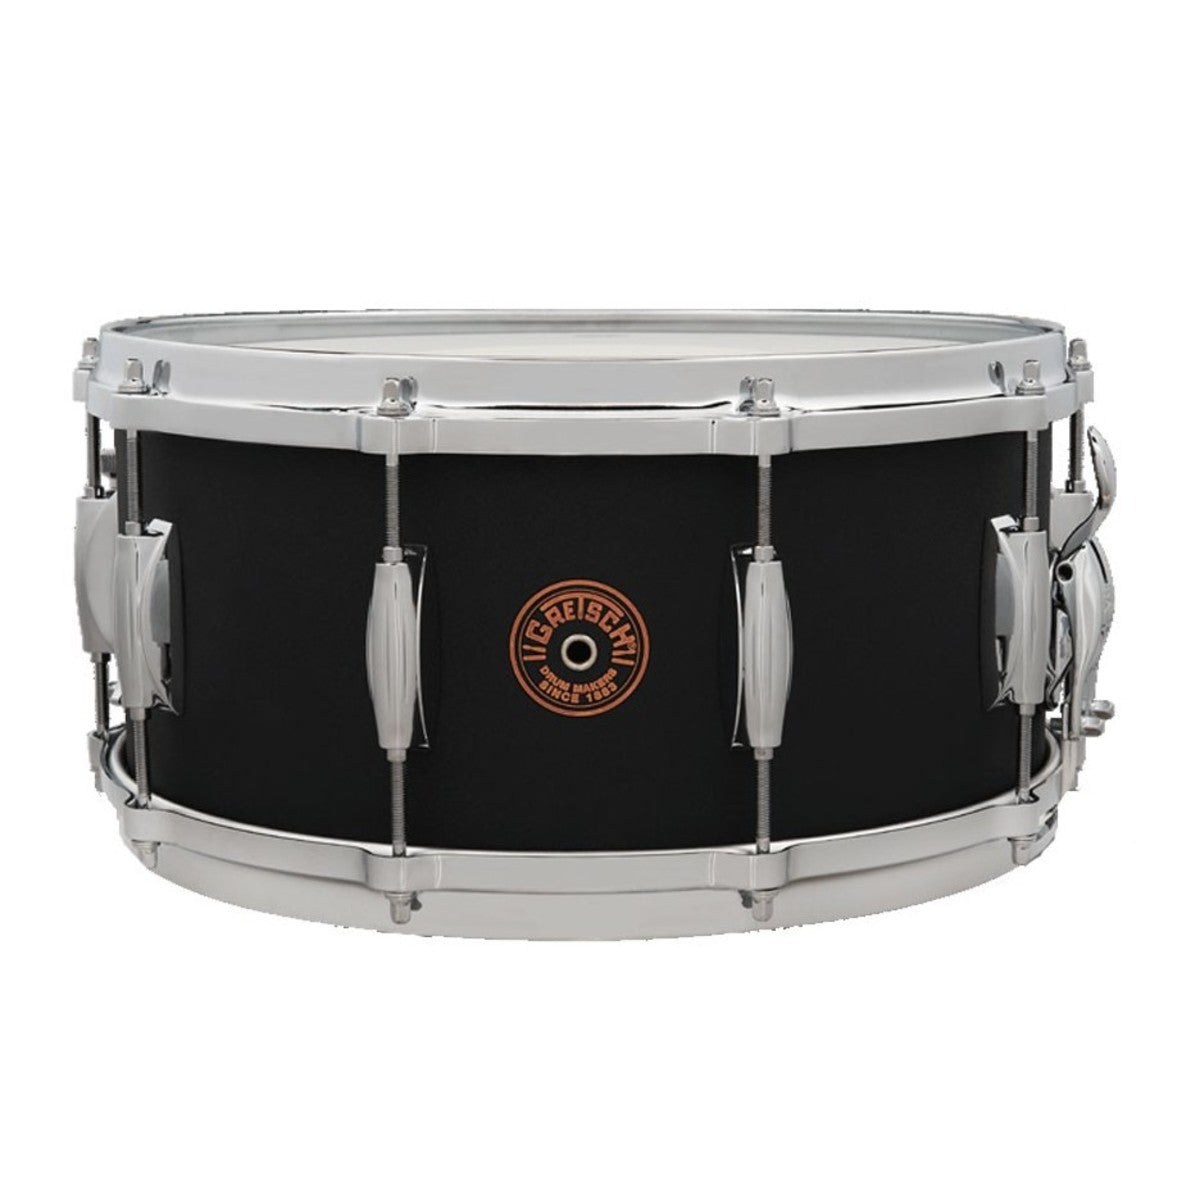 Gretsch USA Black Copper 14"x6.5" Snare Drum